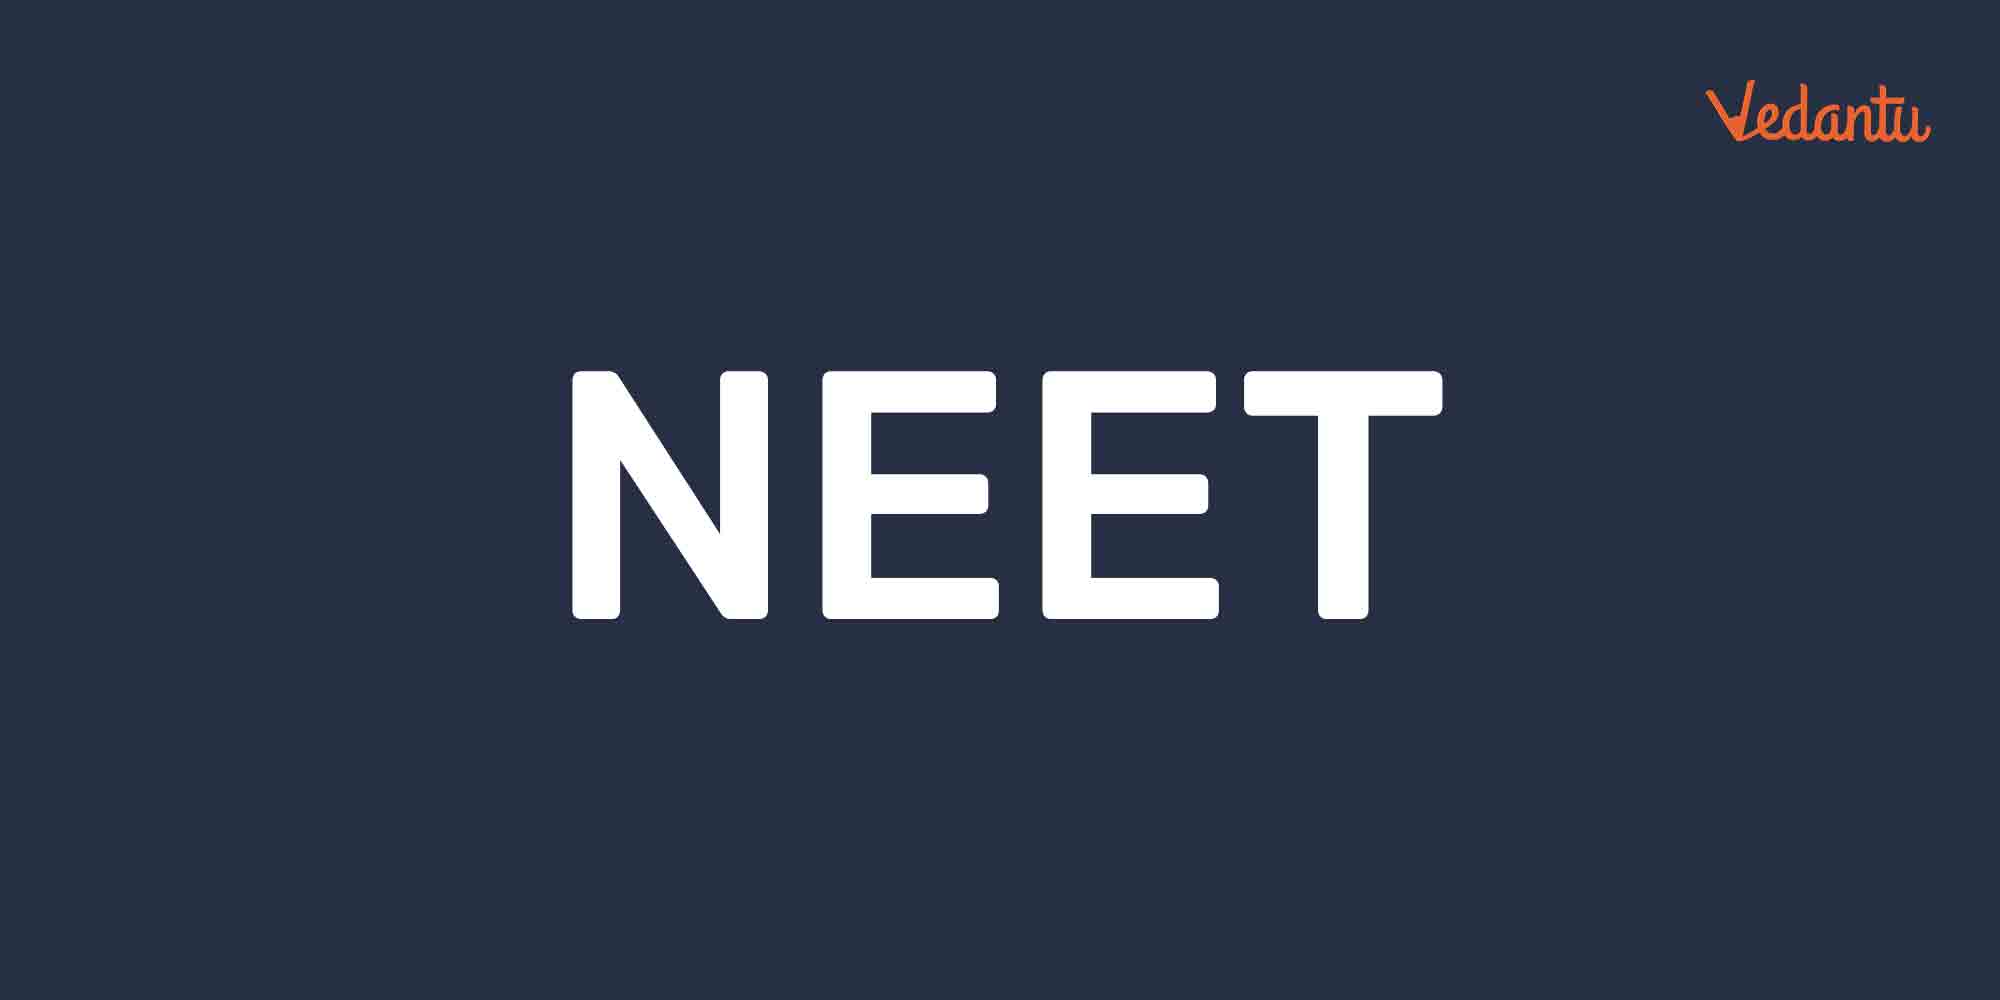 How do I do Long-Term Memorization for the NEET?